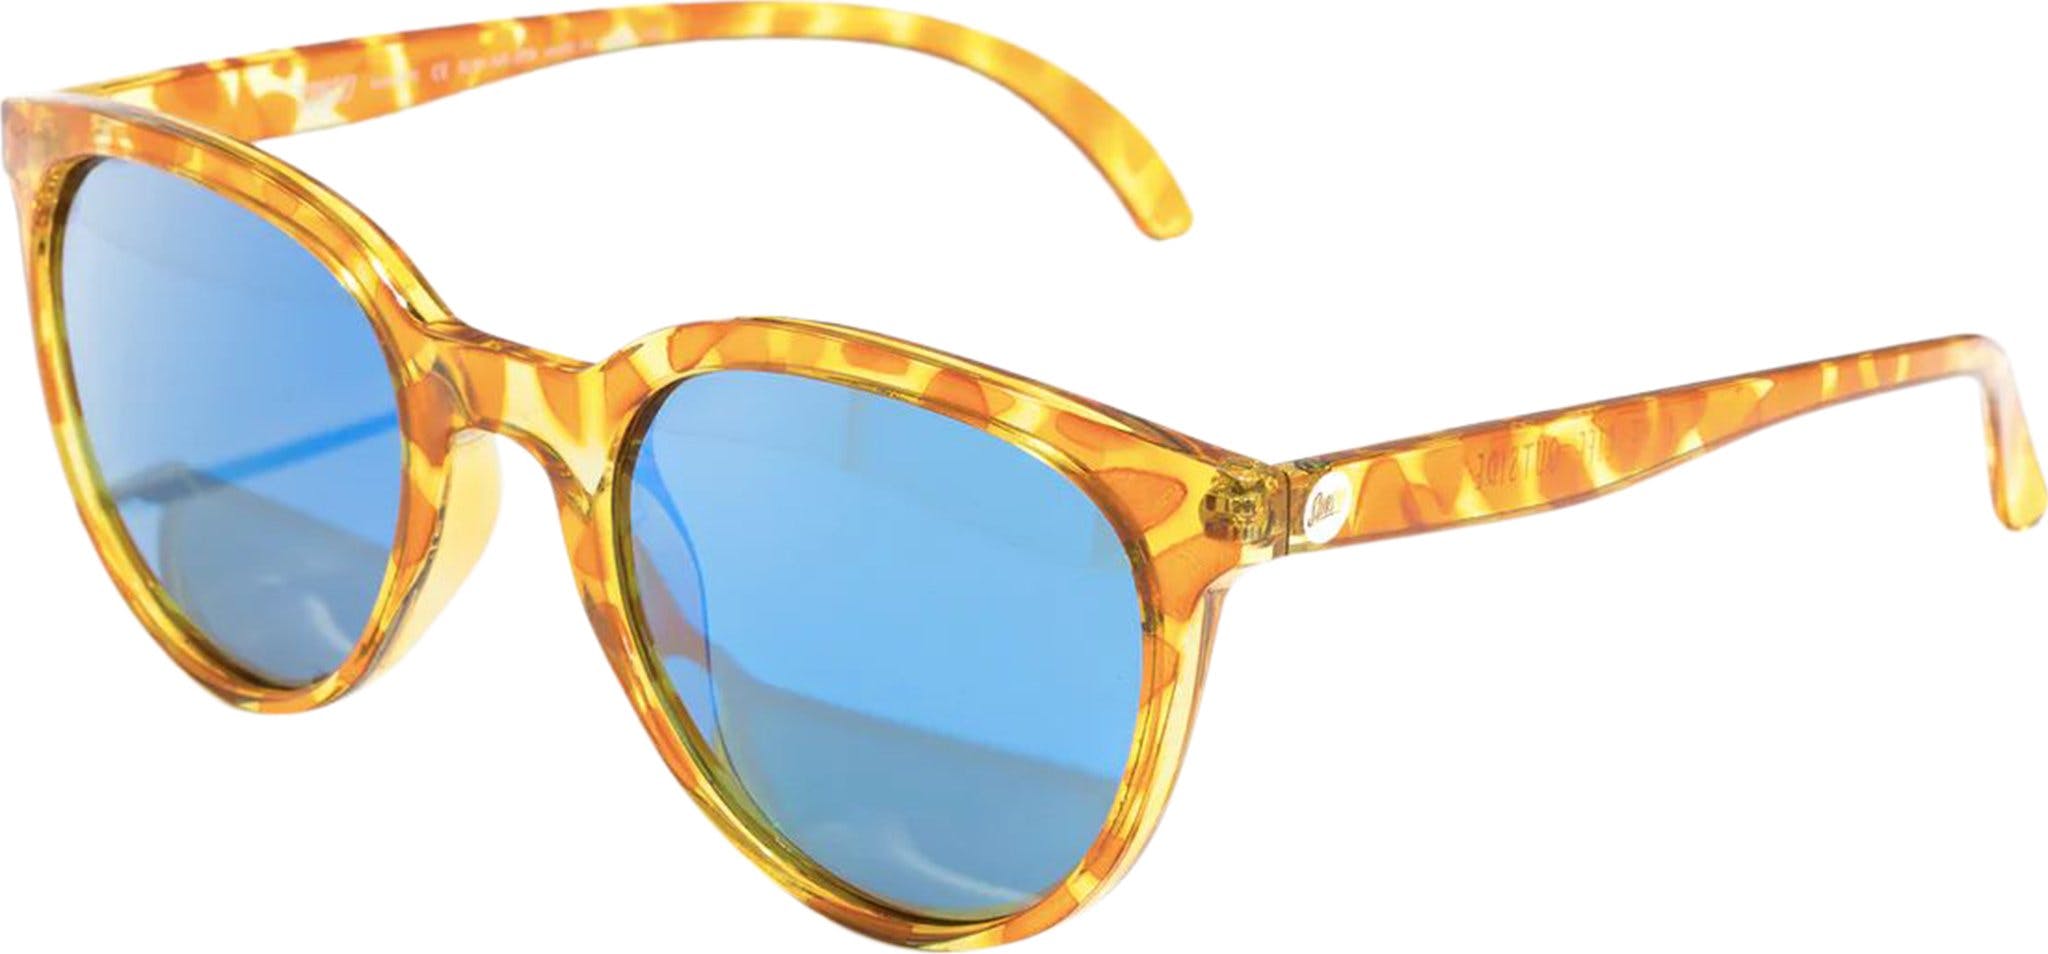 Product image for Makani Sunglasses